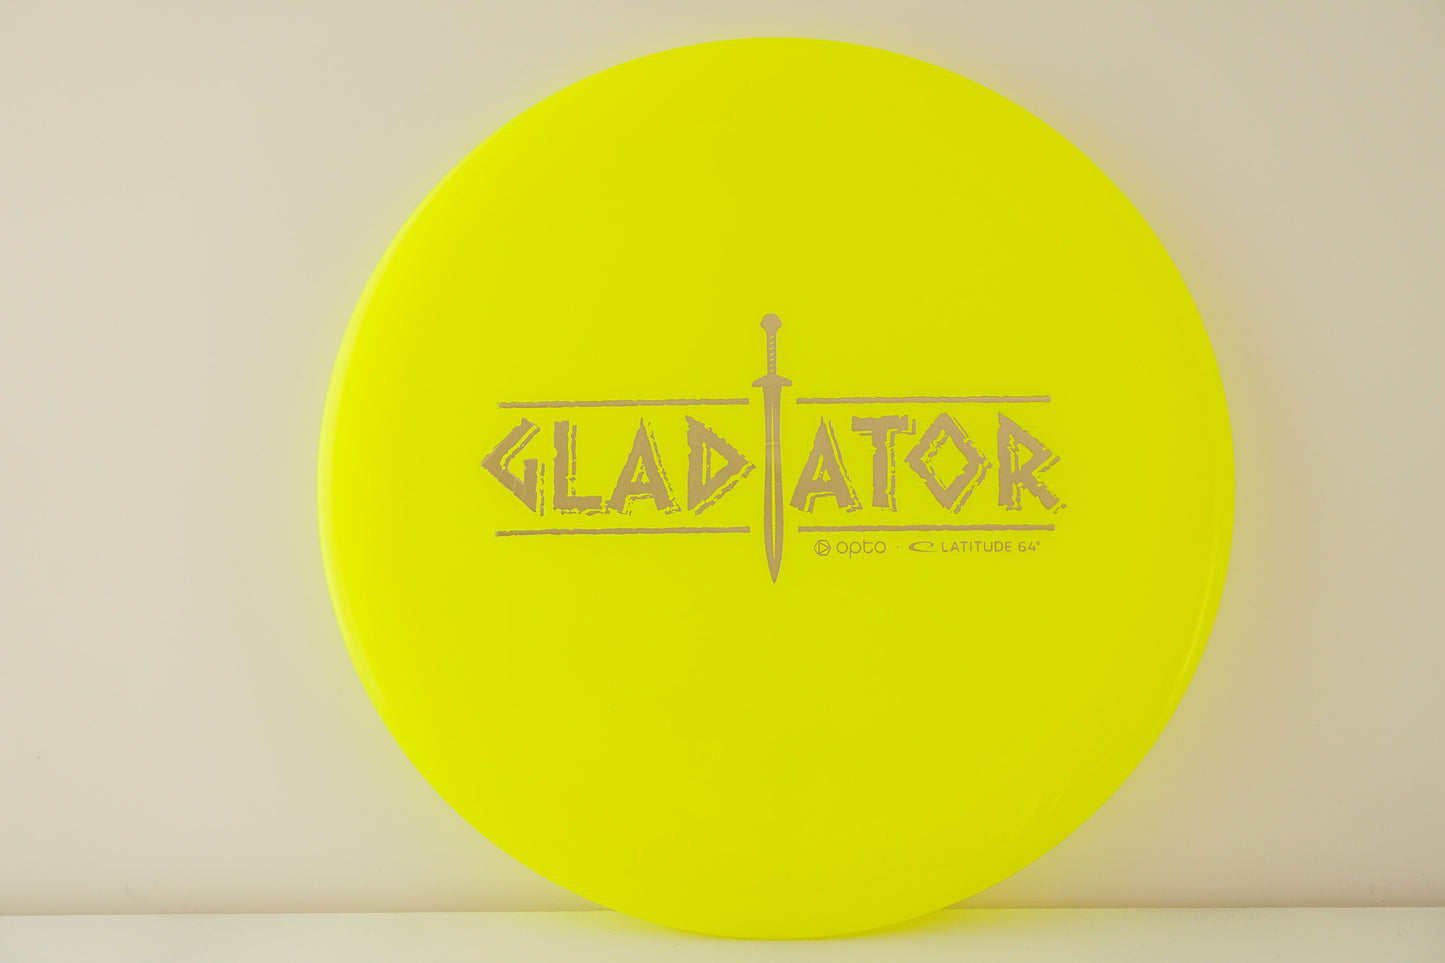 Latitude 64 Opto Gladiator